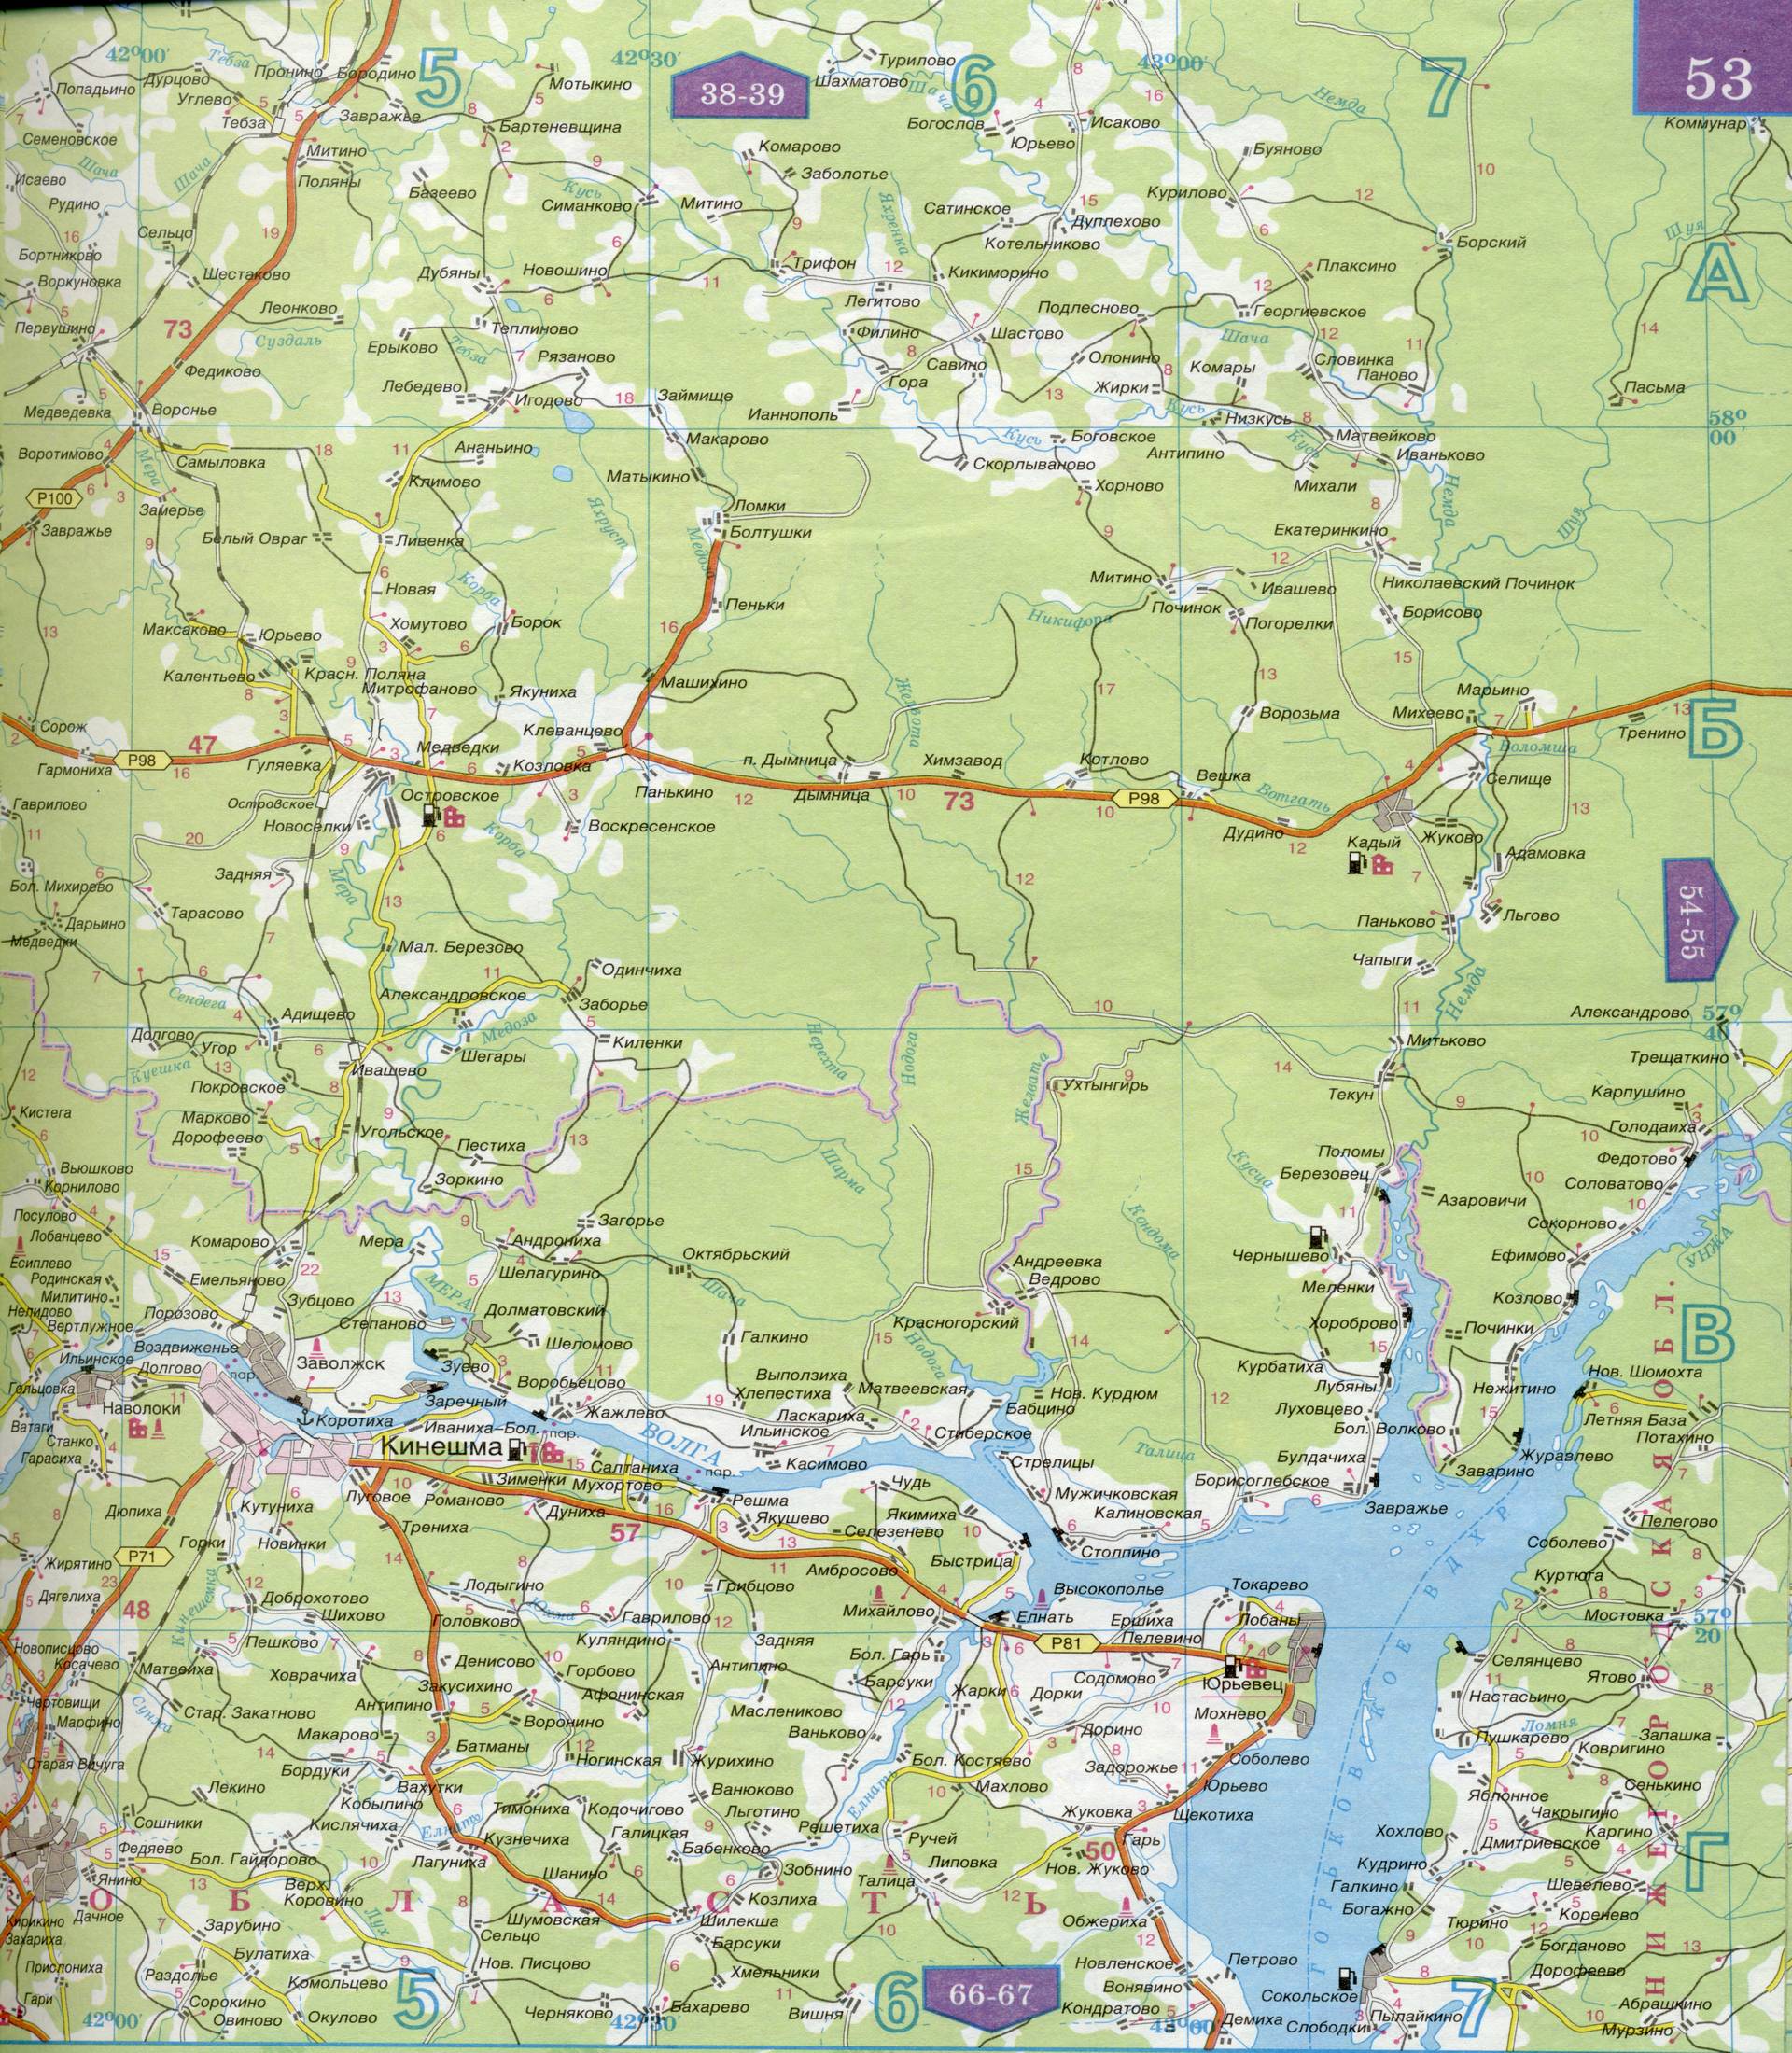 Карта Костромской области масштаба 1см:5км. Карта автодорог Костромской области. Скачать карту бесплатно, B0 - 